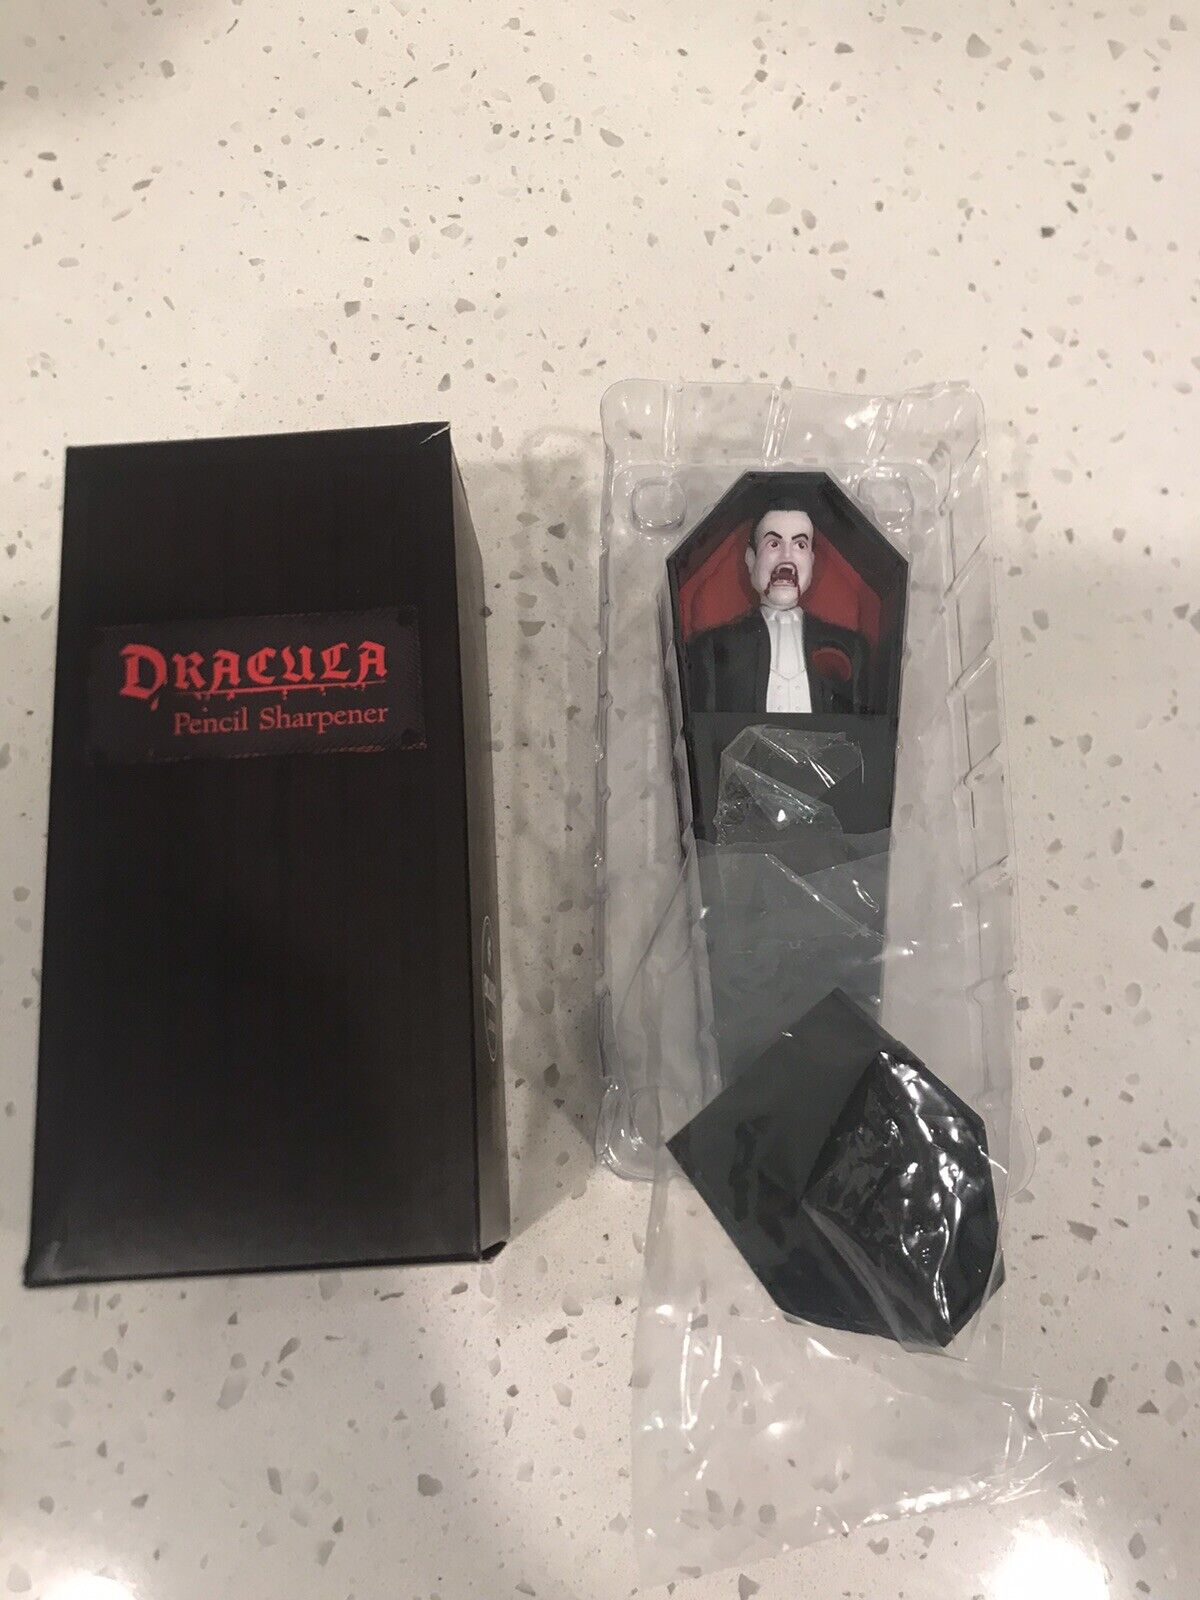 2019 Loot Crate Exclusive Dracula Coffin Pencil Sharpener Nib.